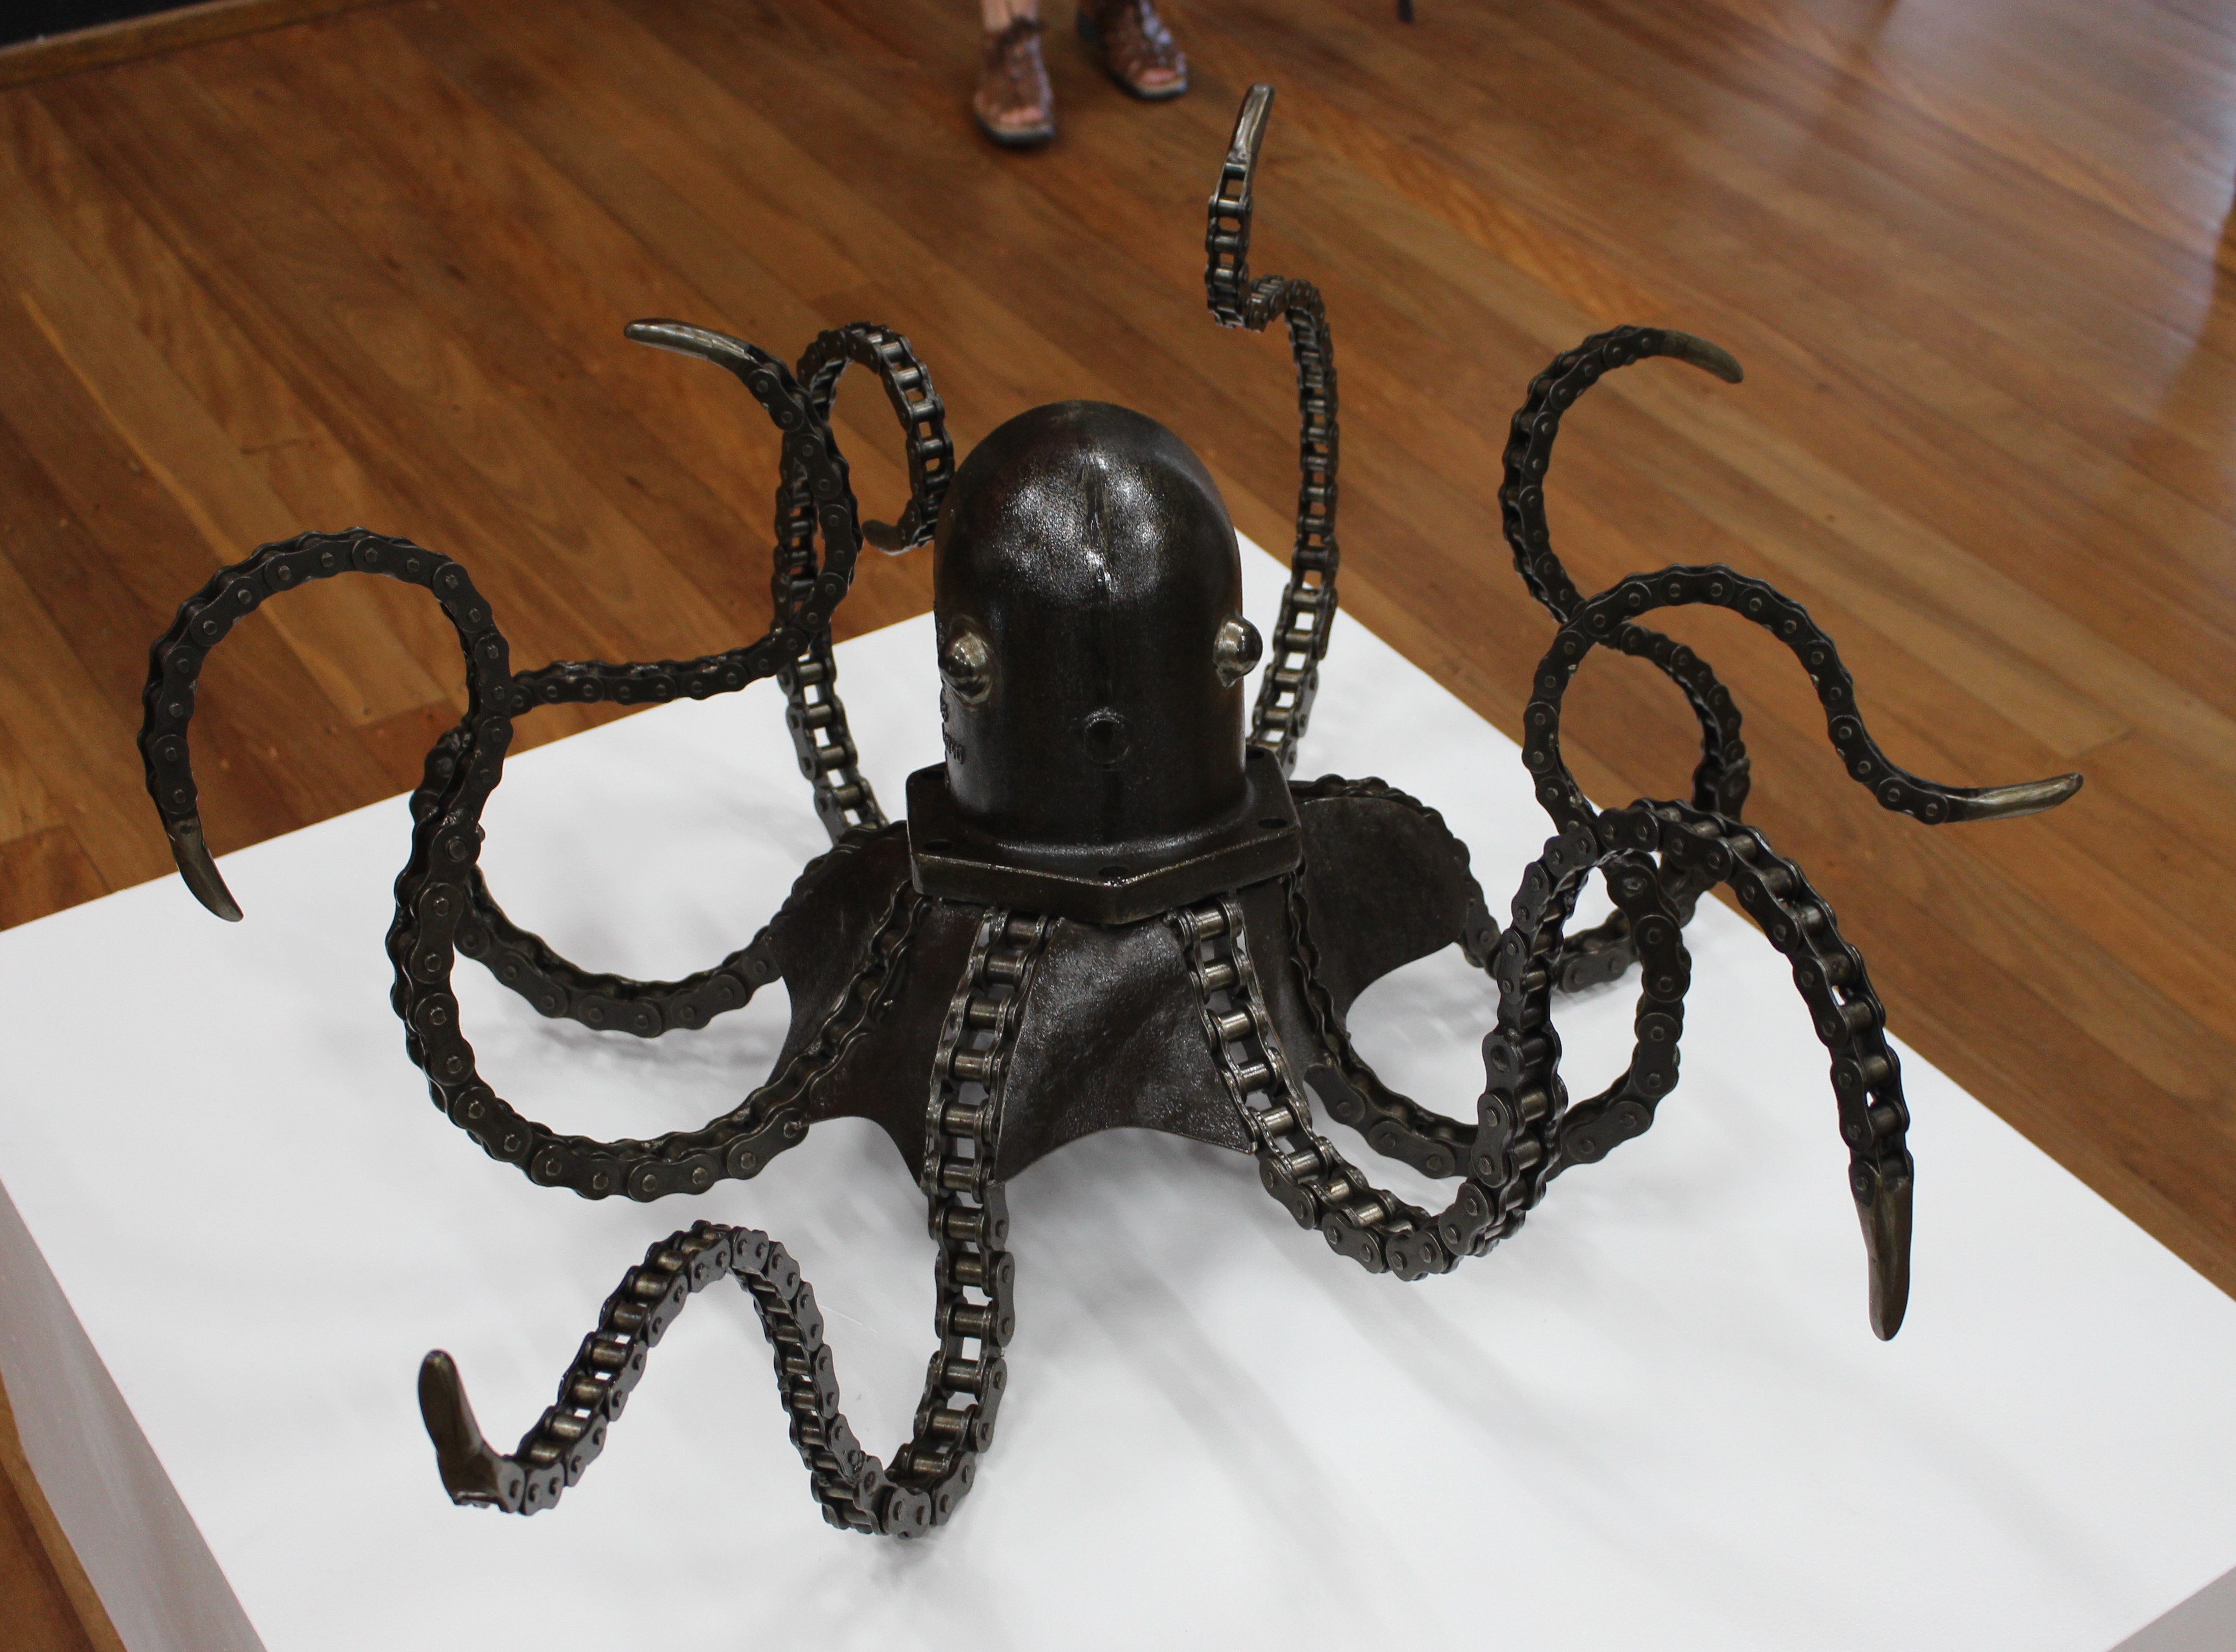 Oliver the Octopus by Jordan Tarlinton, $1,100. Photo: Ian Campbell.